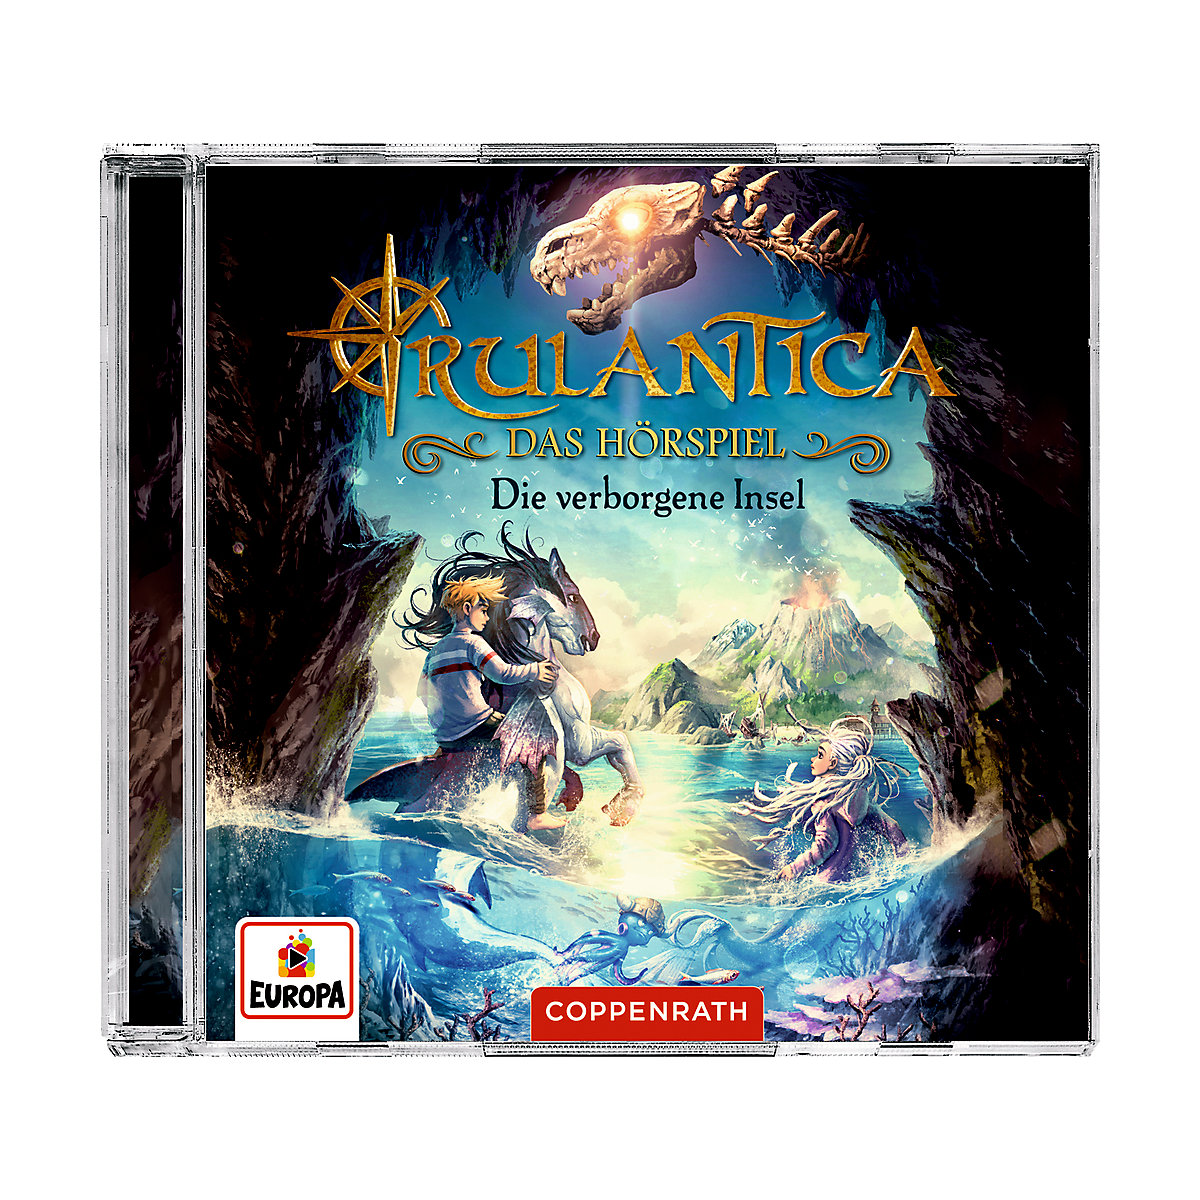 Rulantica 2 Audio-CDs